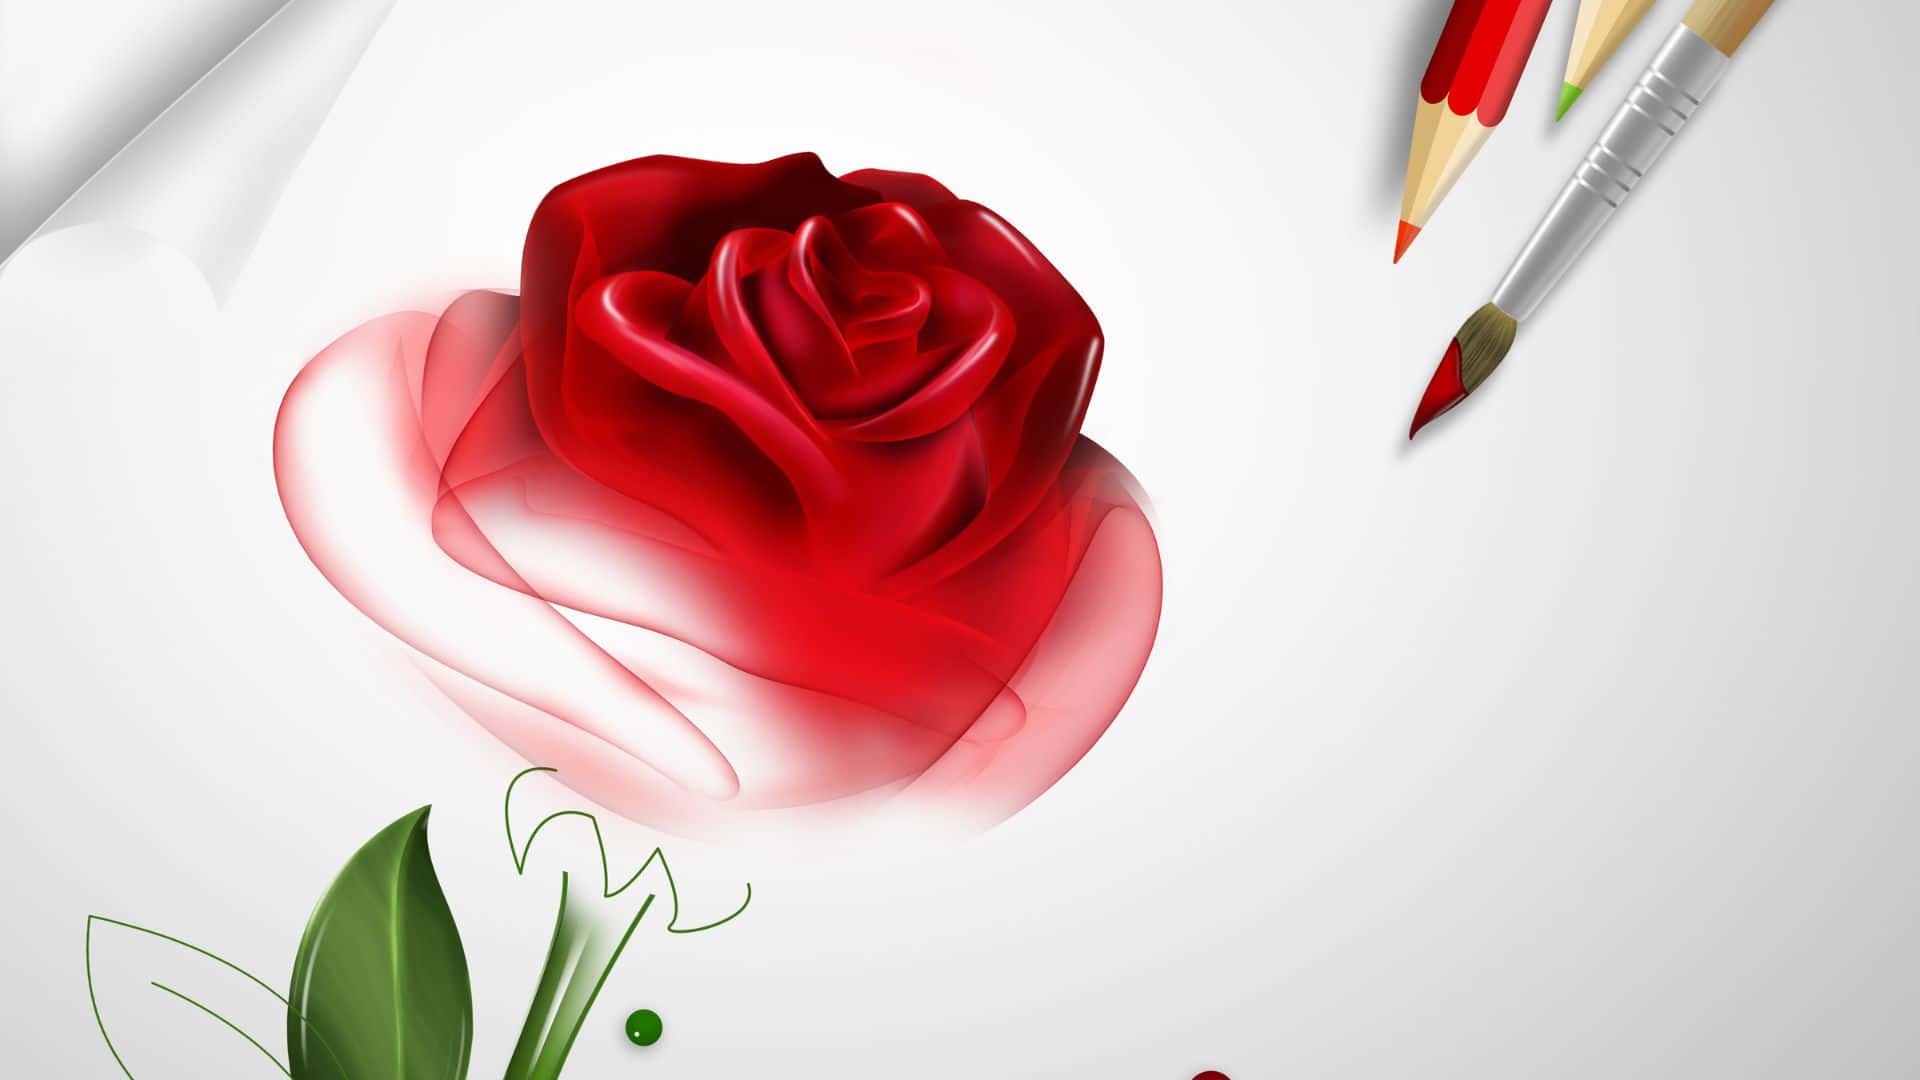 Red Rose Illustration On Progress Background